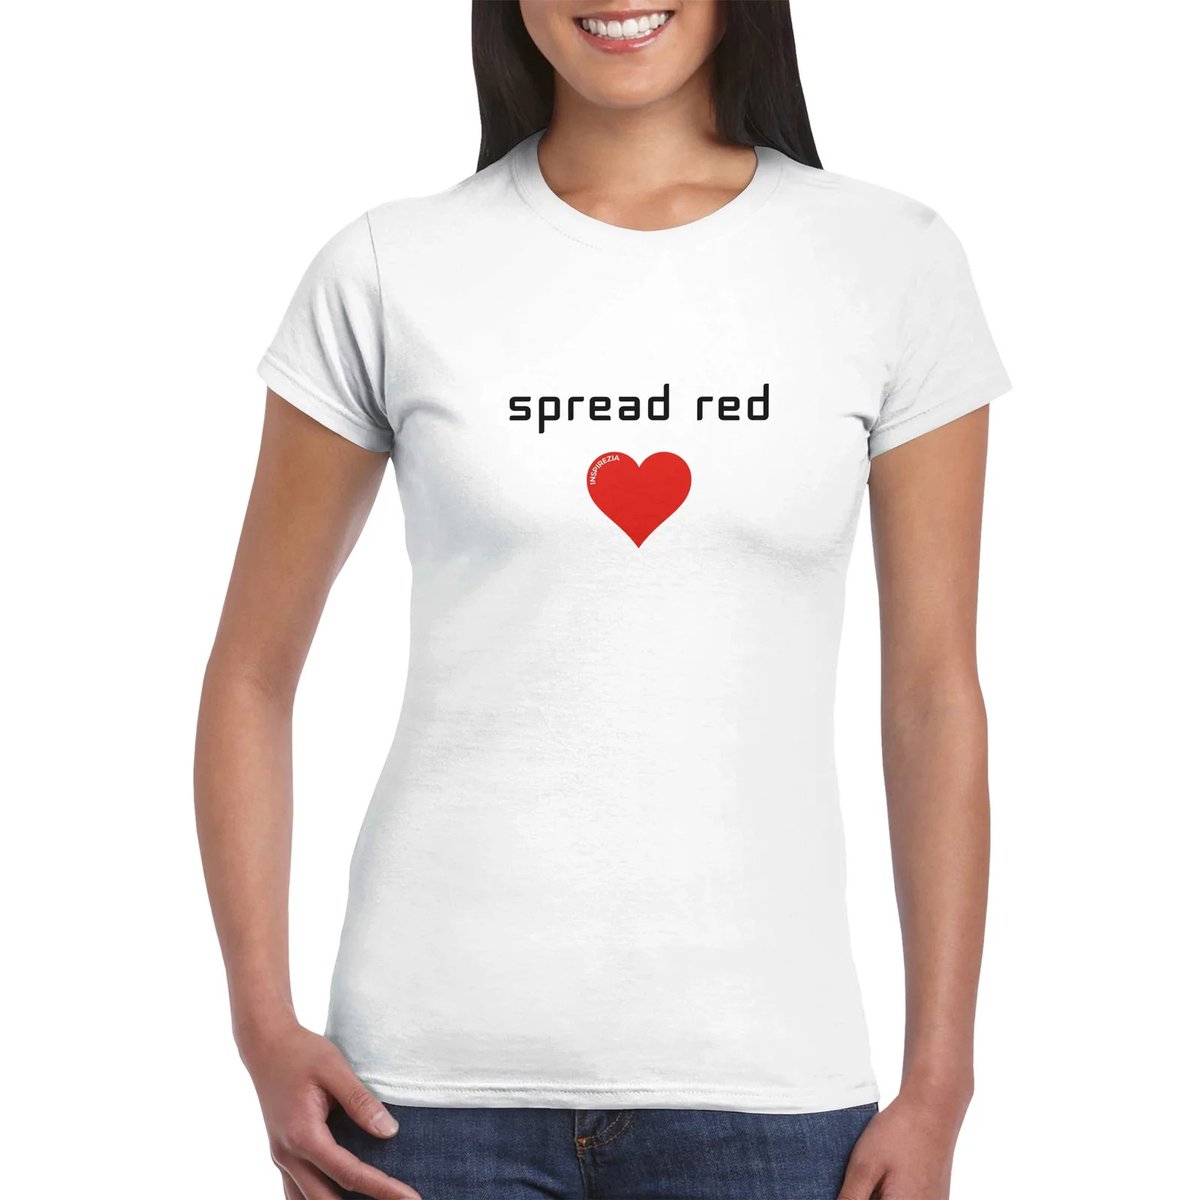 Spread Red! ❤️

#tshirts #red #joy #fun #love #motivation #inspired #inspirezia #trends #casualwear #fashion #happyvibes #gifts #giftforher #bestgift #madetoorder #positivity #spread #style #Instalook #fashionista #instatrends #instagiftforher #wearing